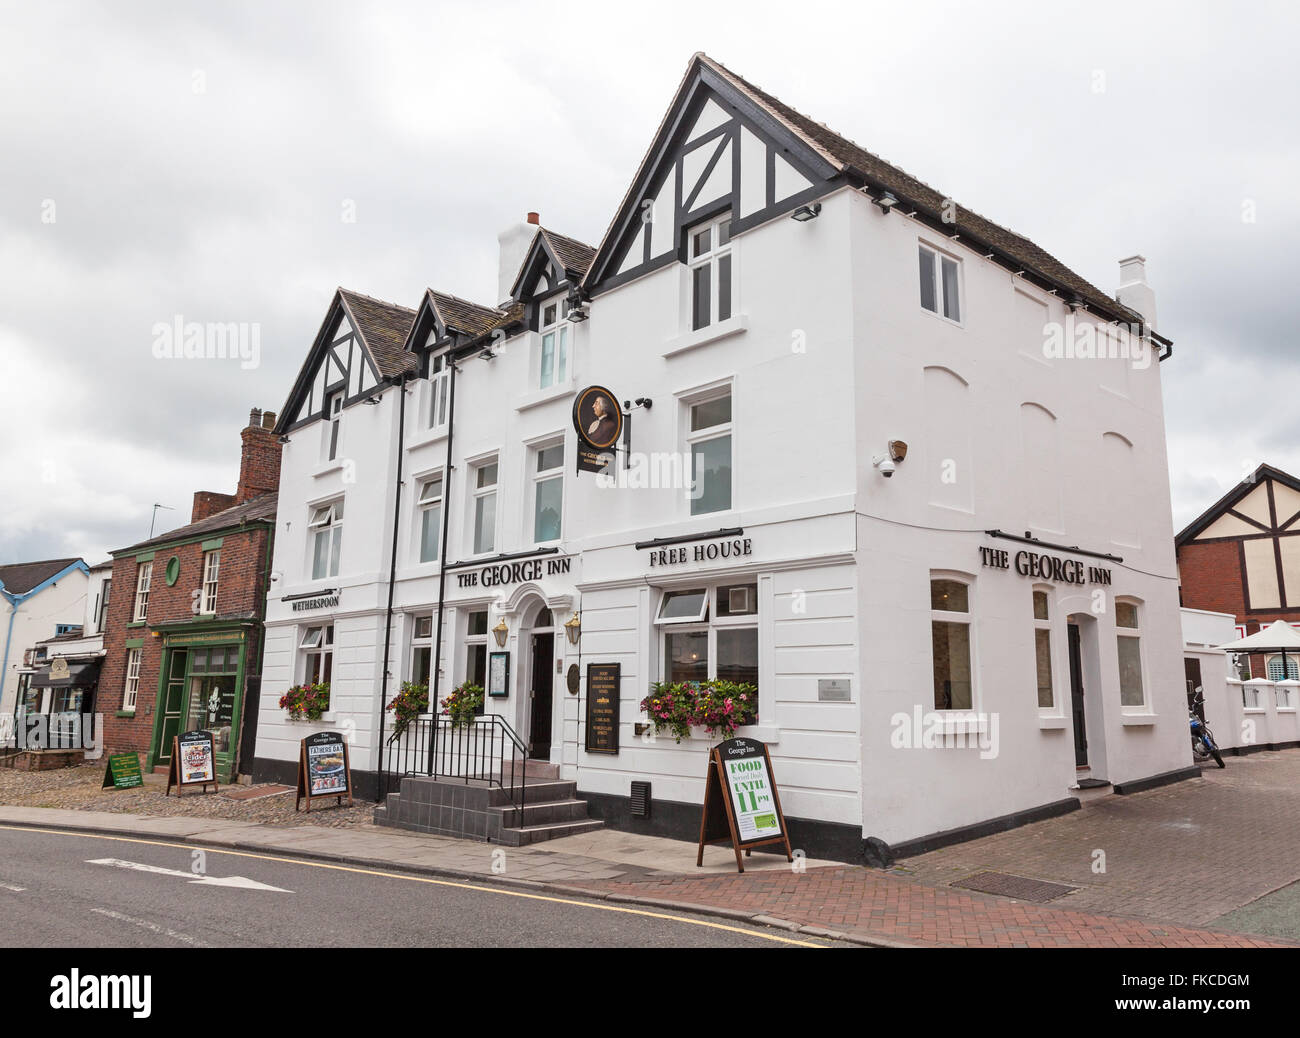 The George Inn or pub or public house Market Square Sandbach Cheshire England UK Stock Photo